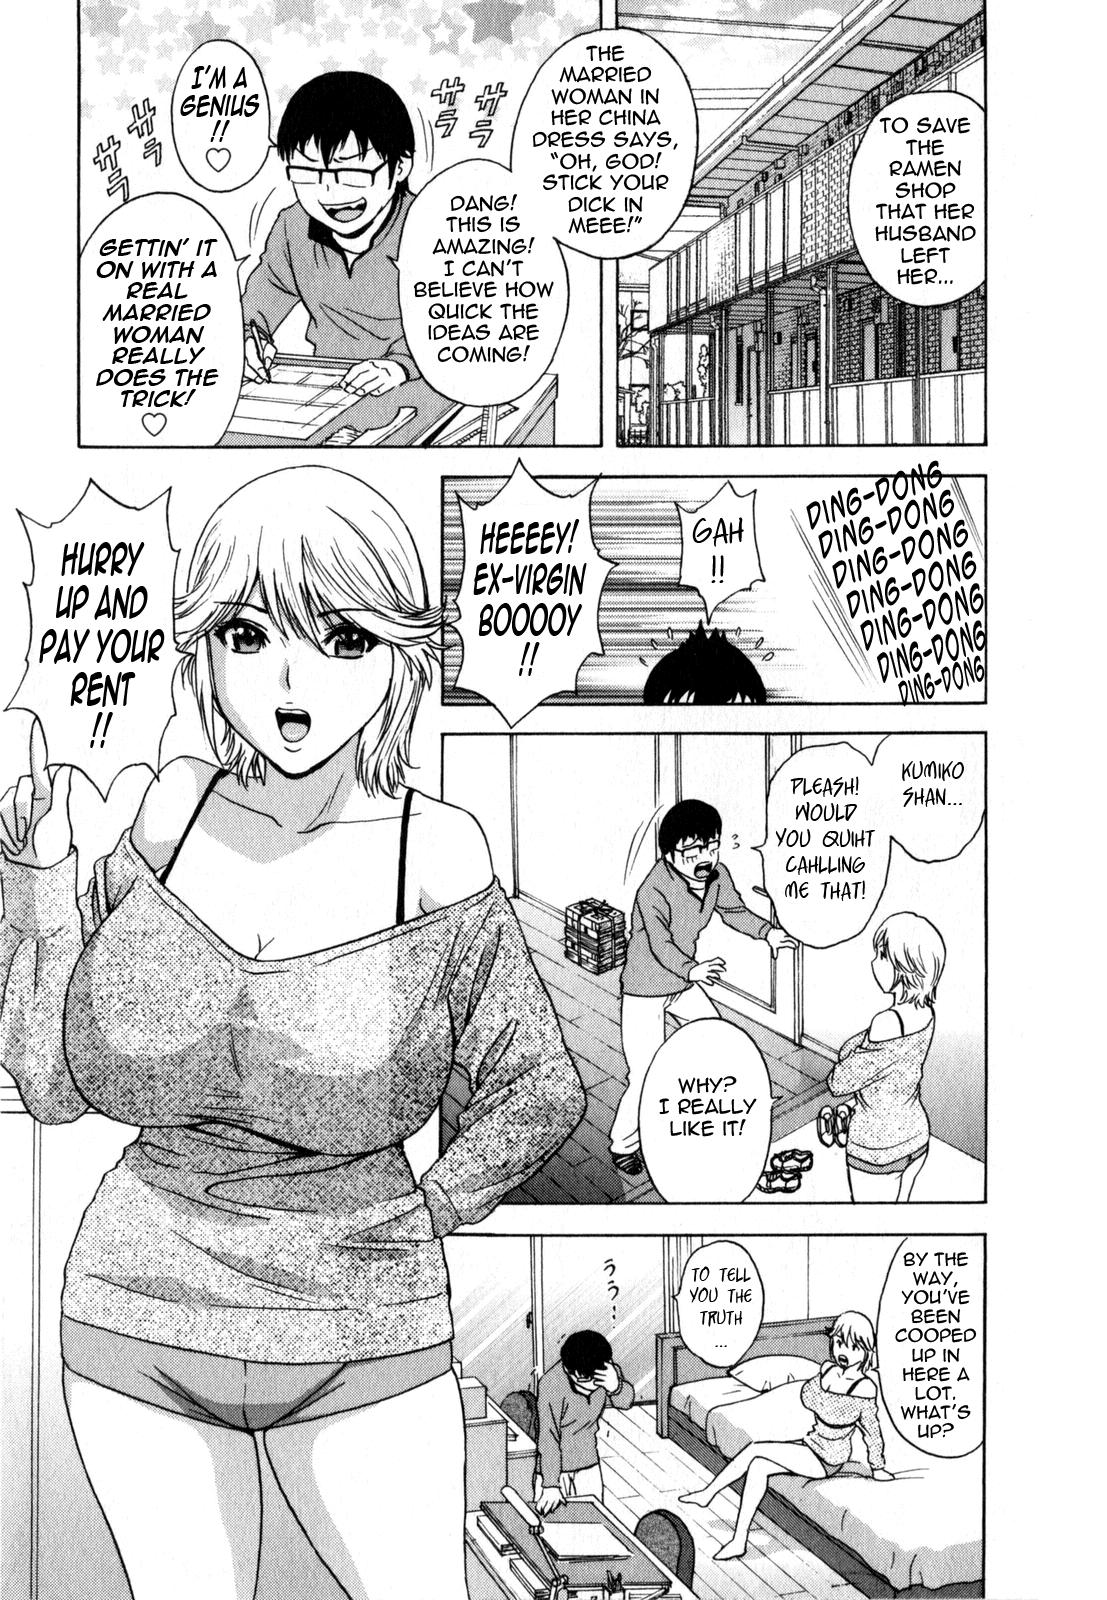 [Hidemaru] Life with Married Women Just Like a Manga 2 - Ch. 1-7 [English] {Tadanohito} 58